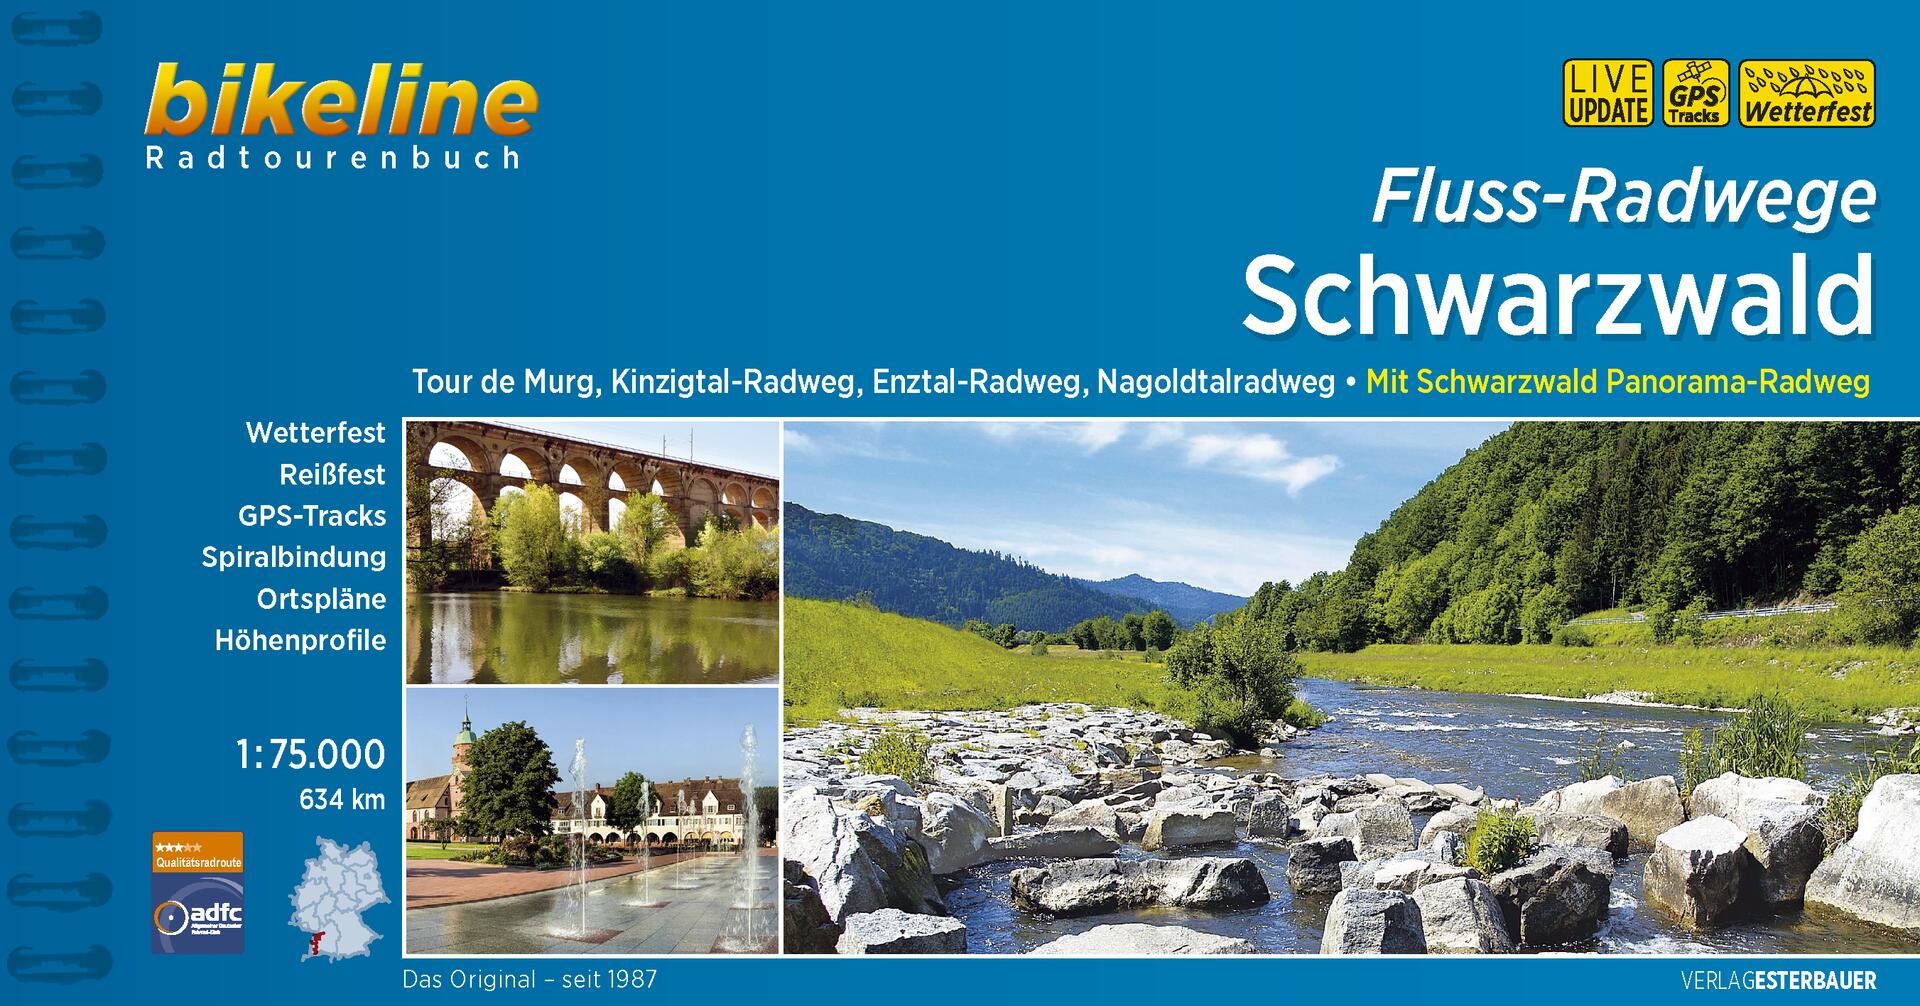 Foto vom Fluss-Radwege Schwarzwald